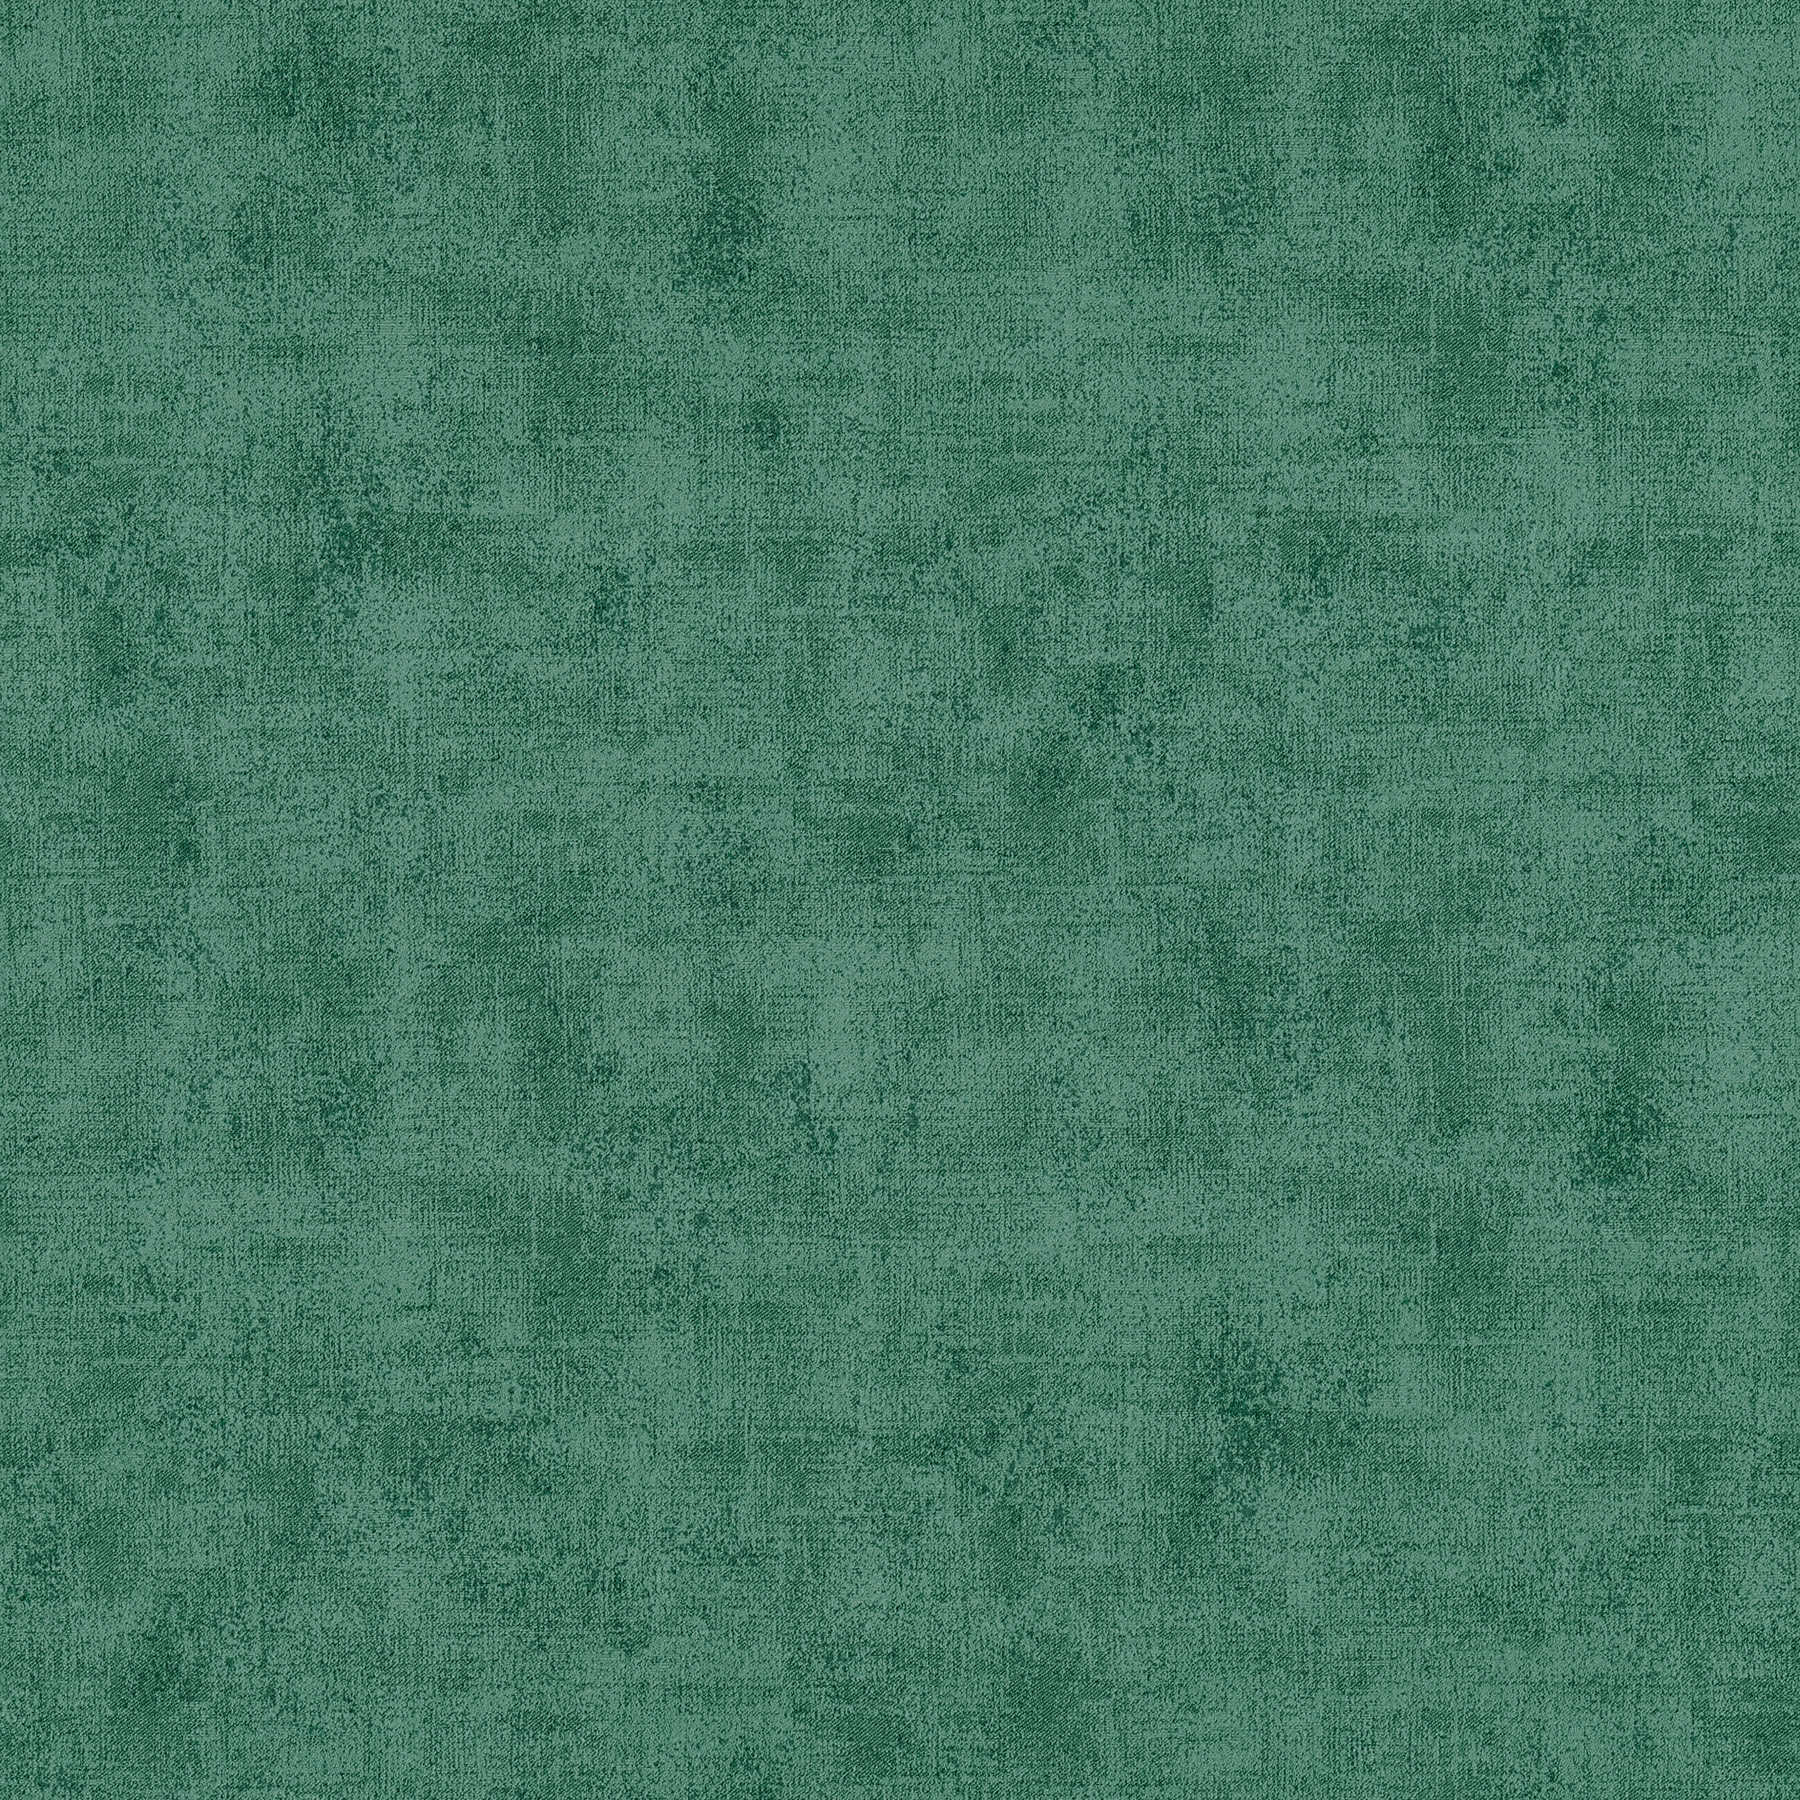 Plain wallpaper with mottled texture look - green
